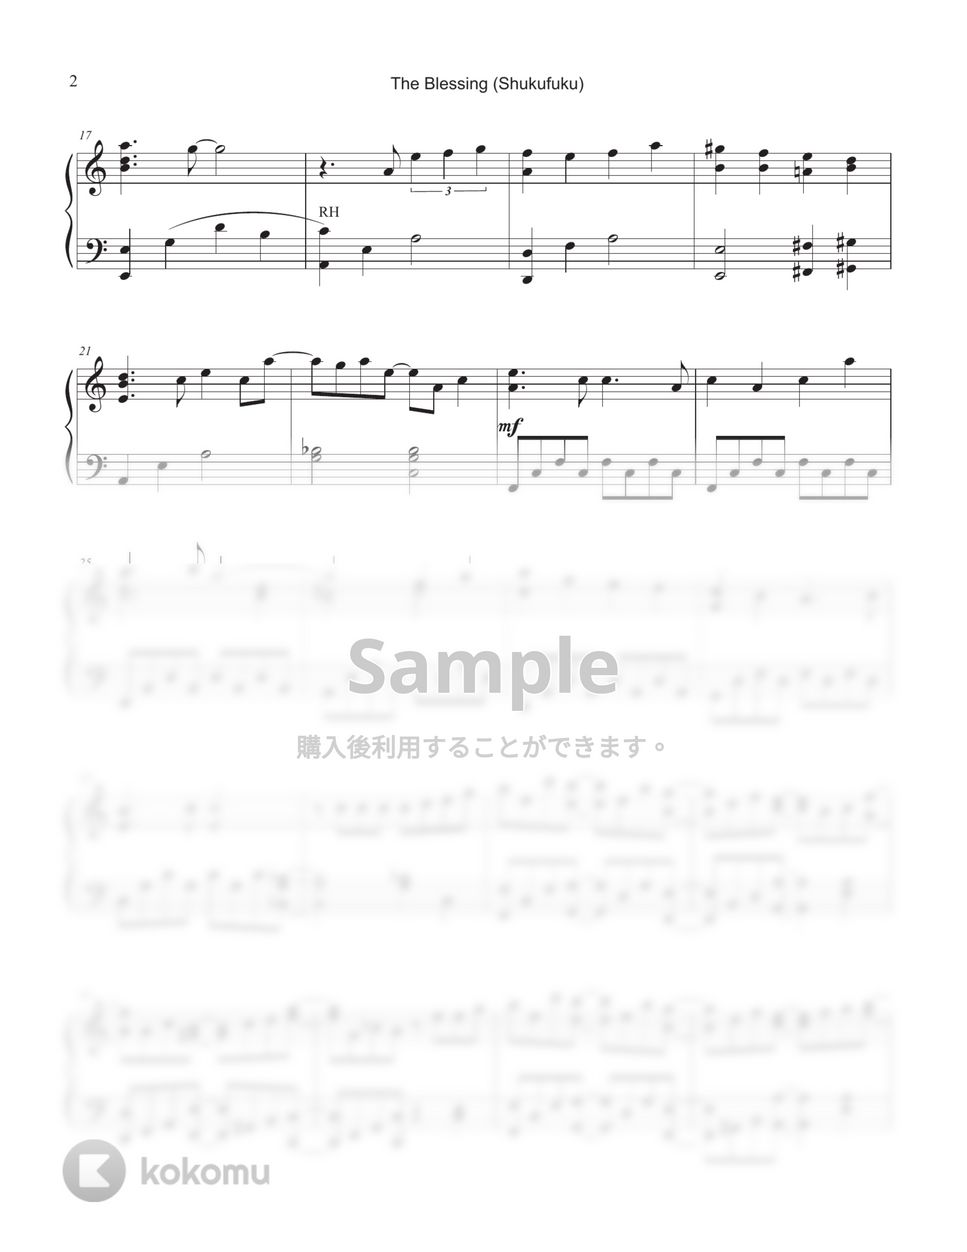 YOASOBI - The Blessing (Shukufuku)「祝福」 by Tully Piano